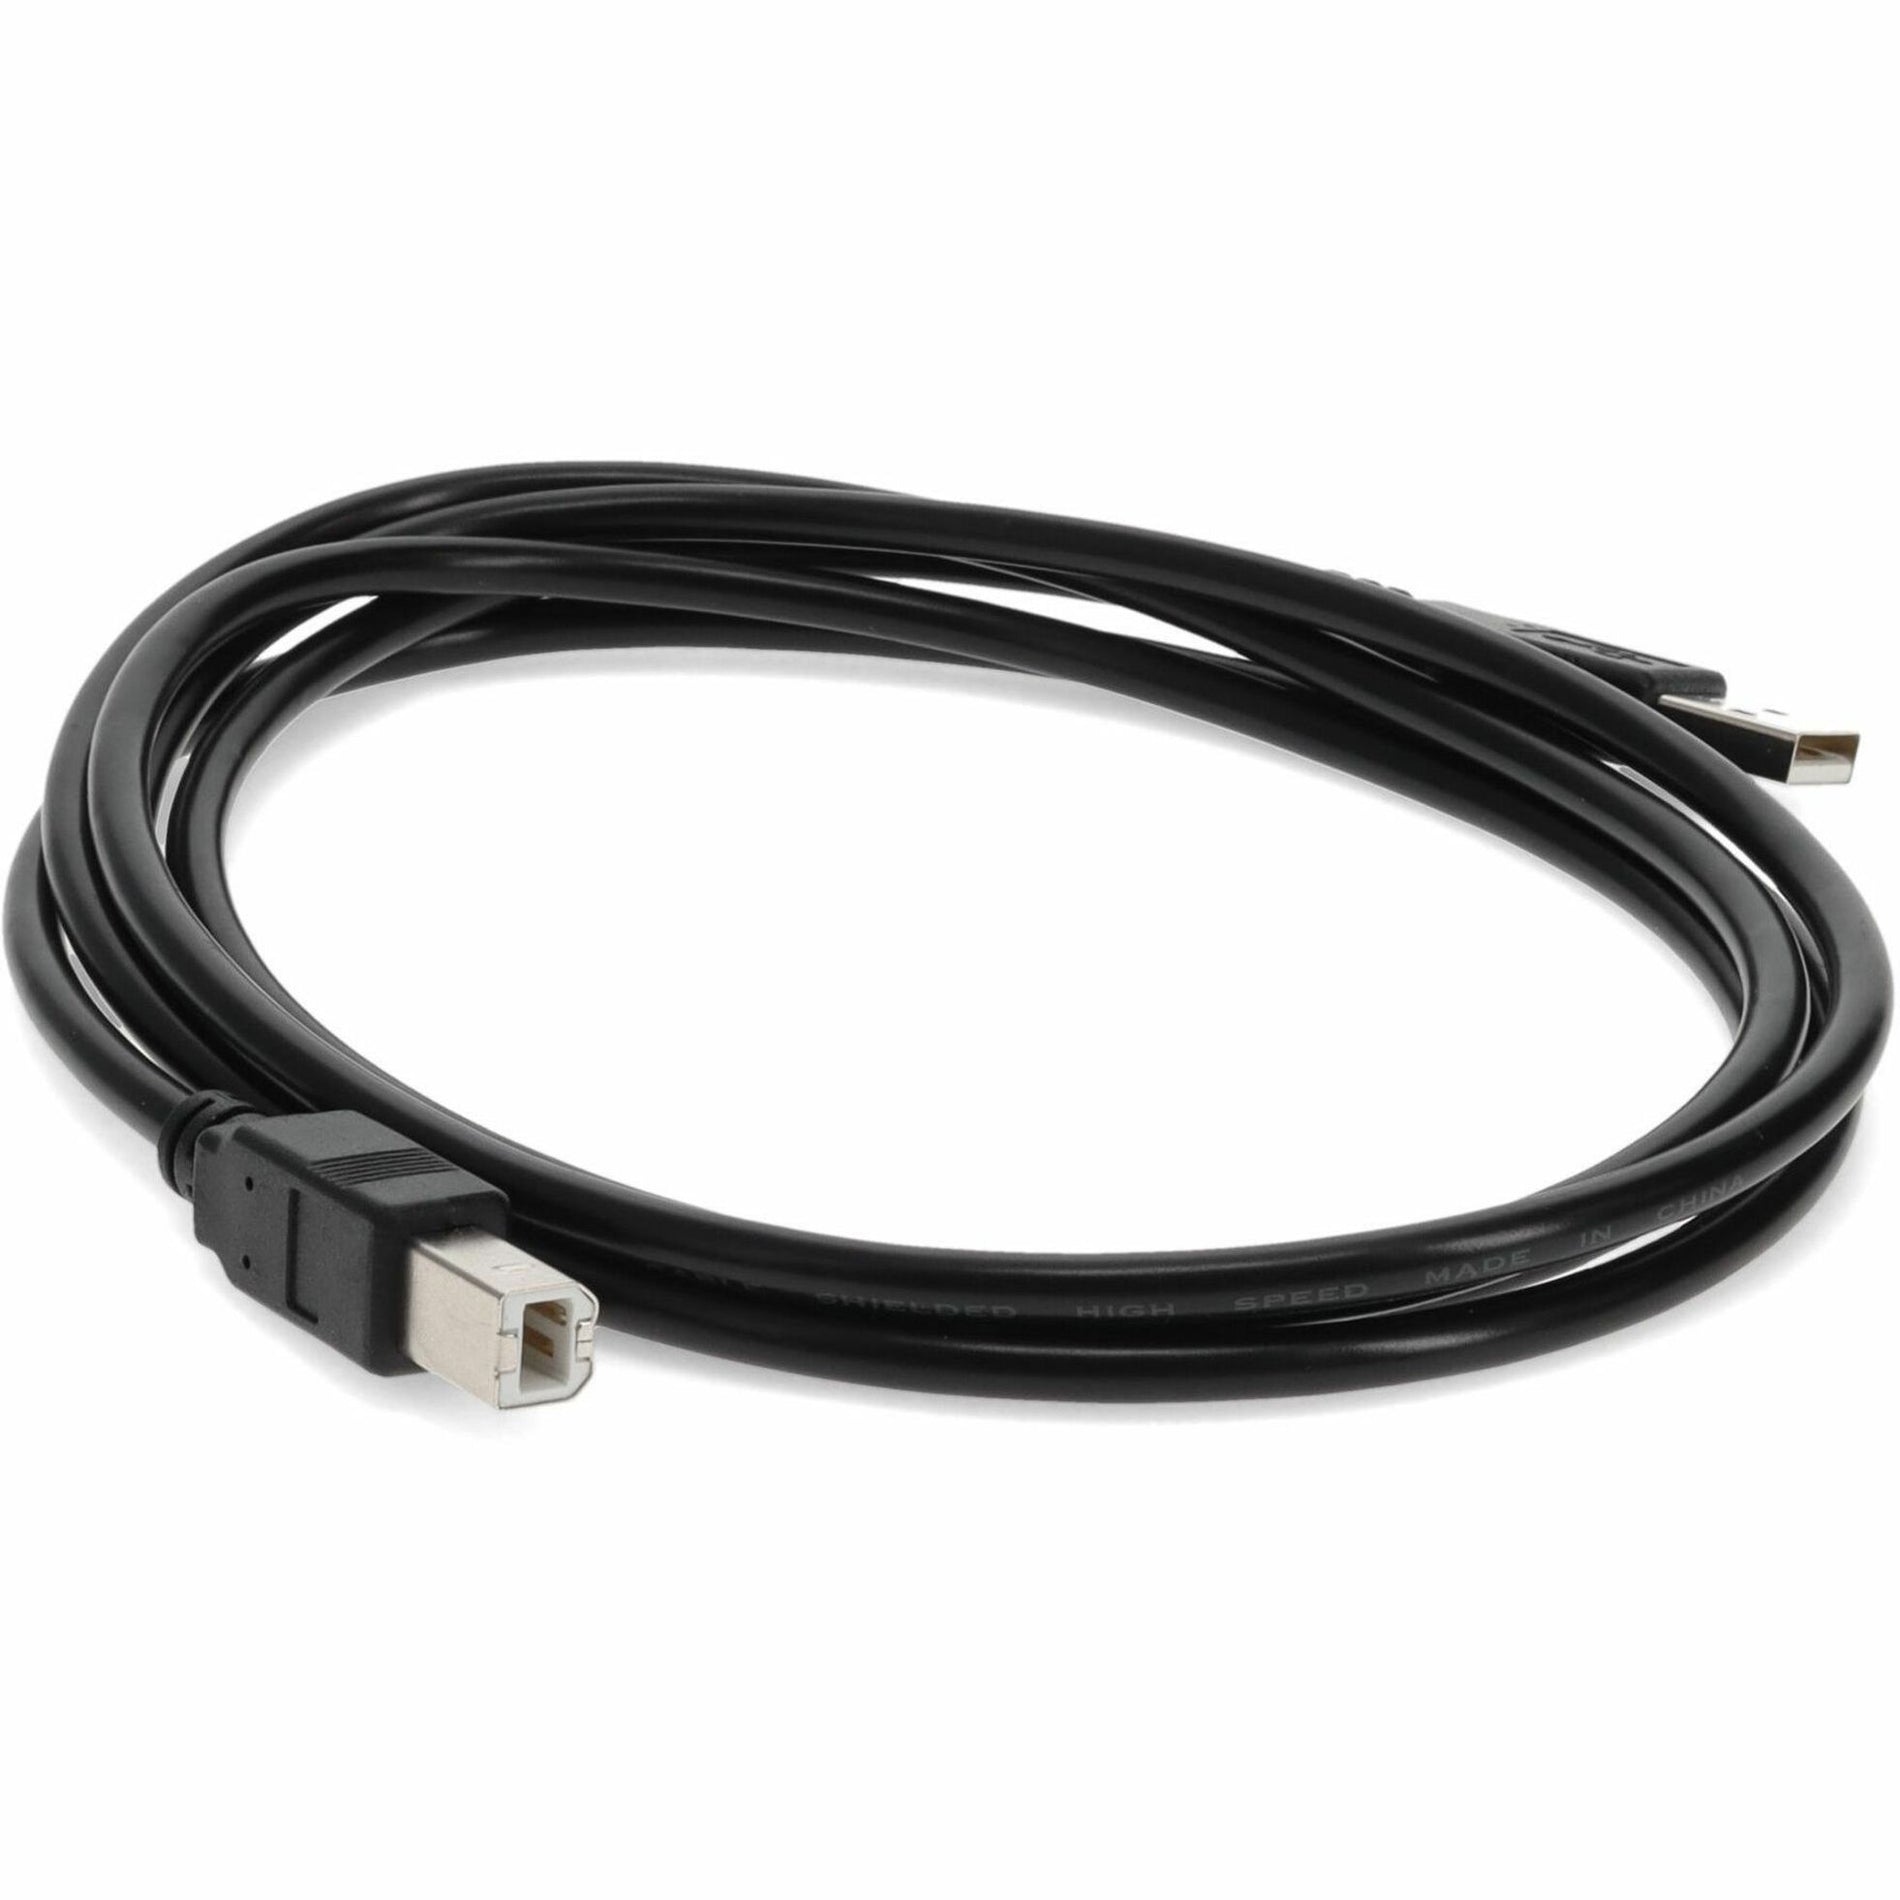 AddOn USBEXTAB15 USB Extension Data Transfer Cable, 15 ft, Black